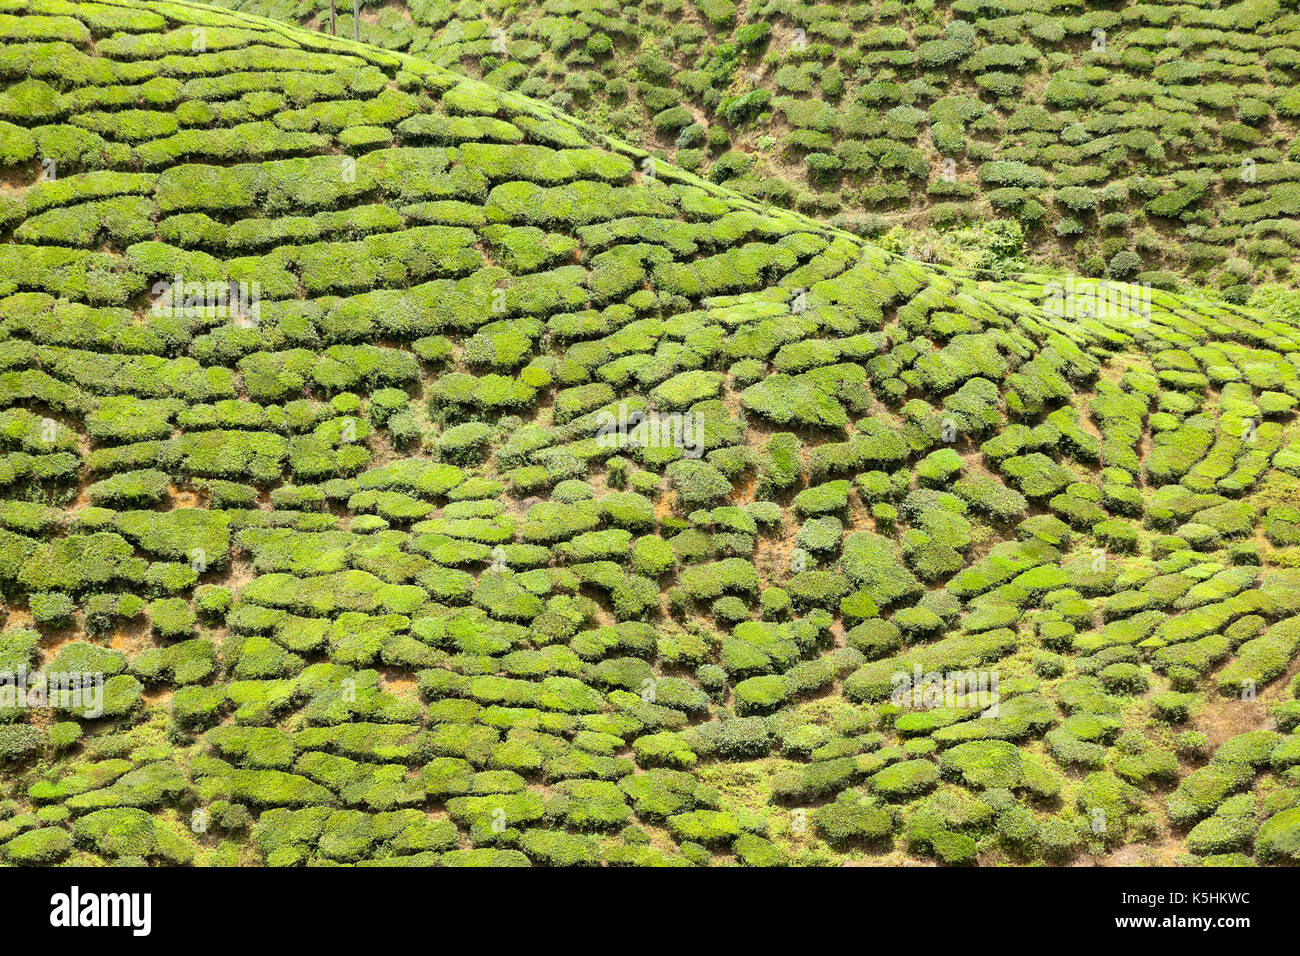 Tea bushes on a hillside, Camellia sinensis, Stock Photo